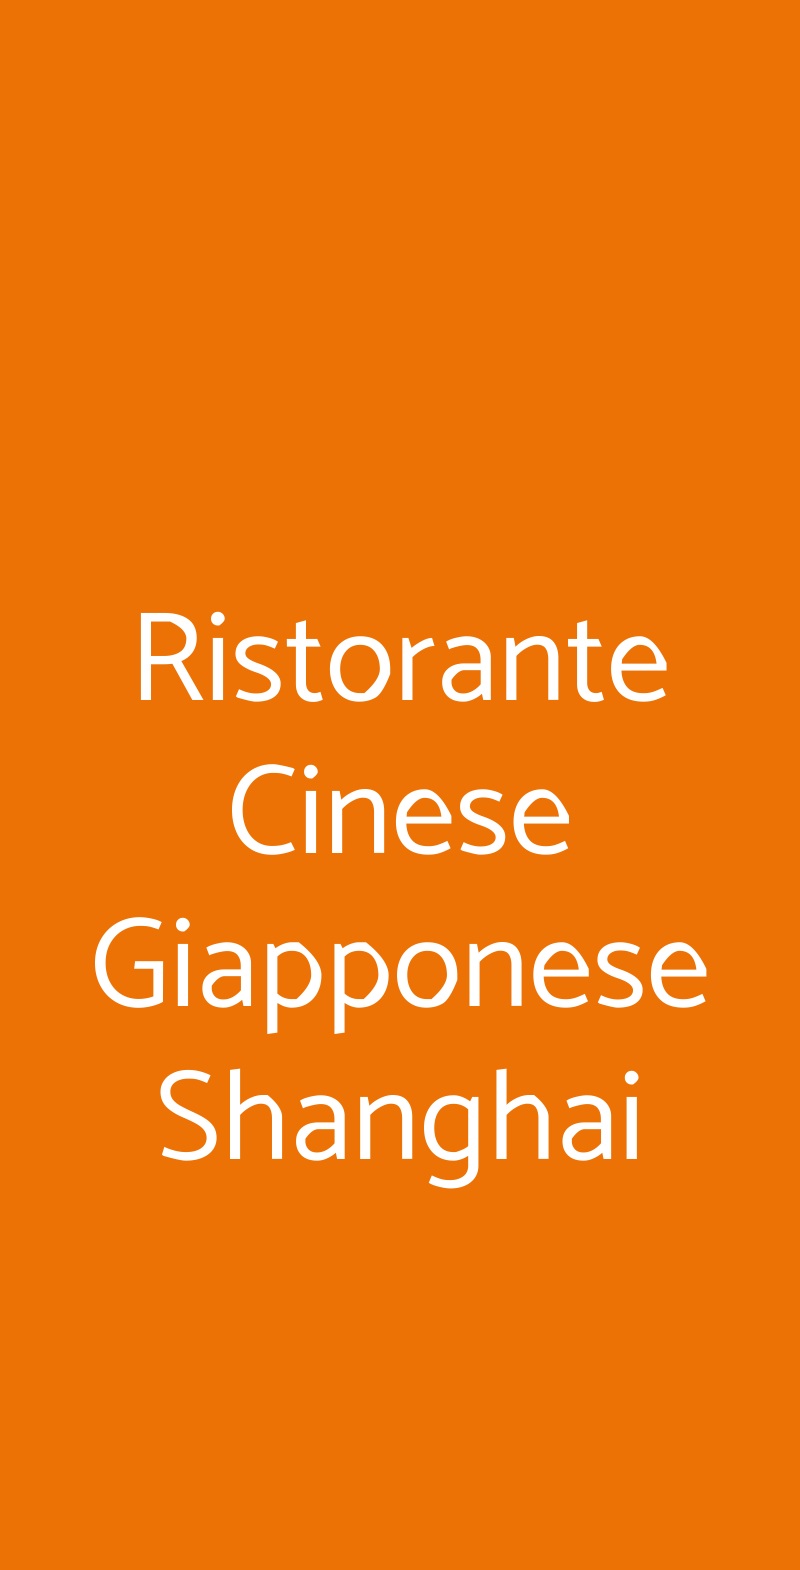 Ristorante Cinese Giapponese Shanghai Roma menù 1 pagina